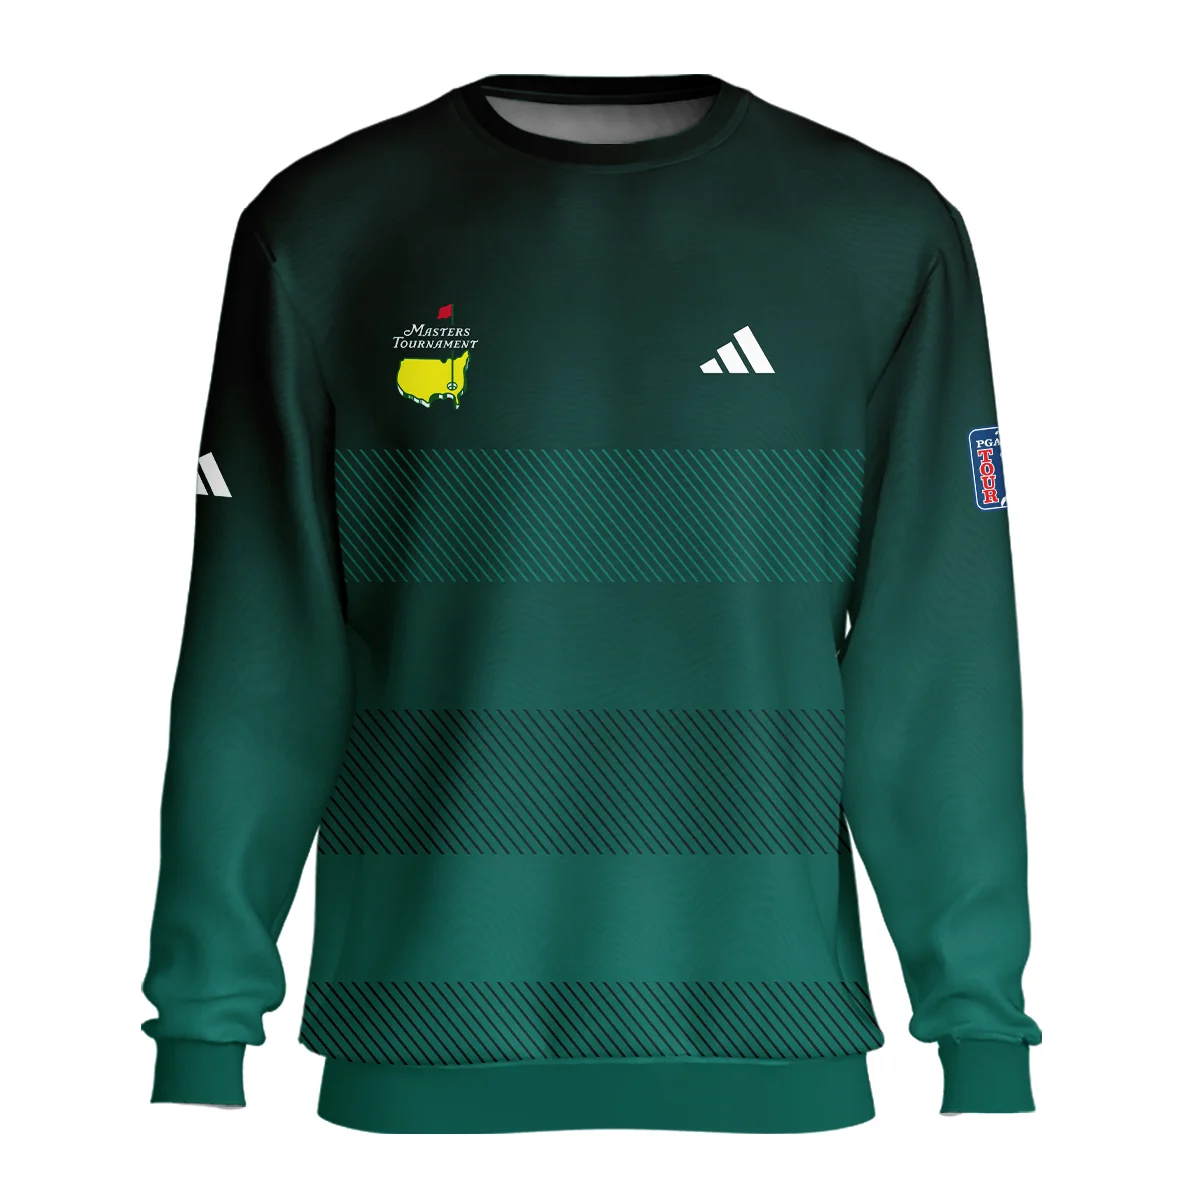 Adidas Masters Tournament Dark Green Gradient Stripes Pattern Golf Sport Unisex Sweatshirt Style Classic Sweatshirt